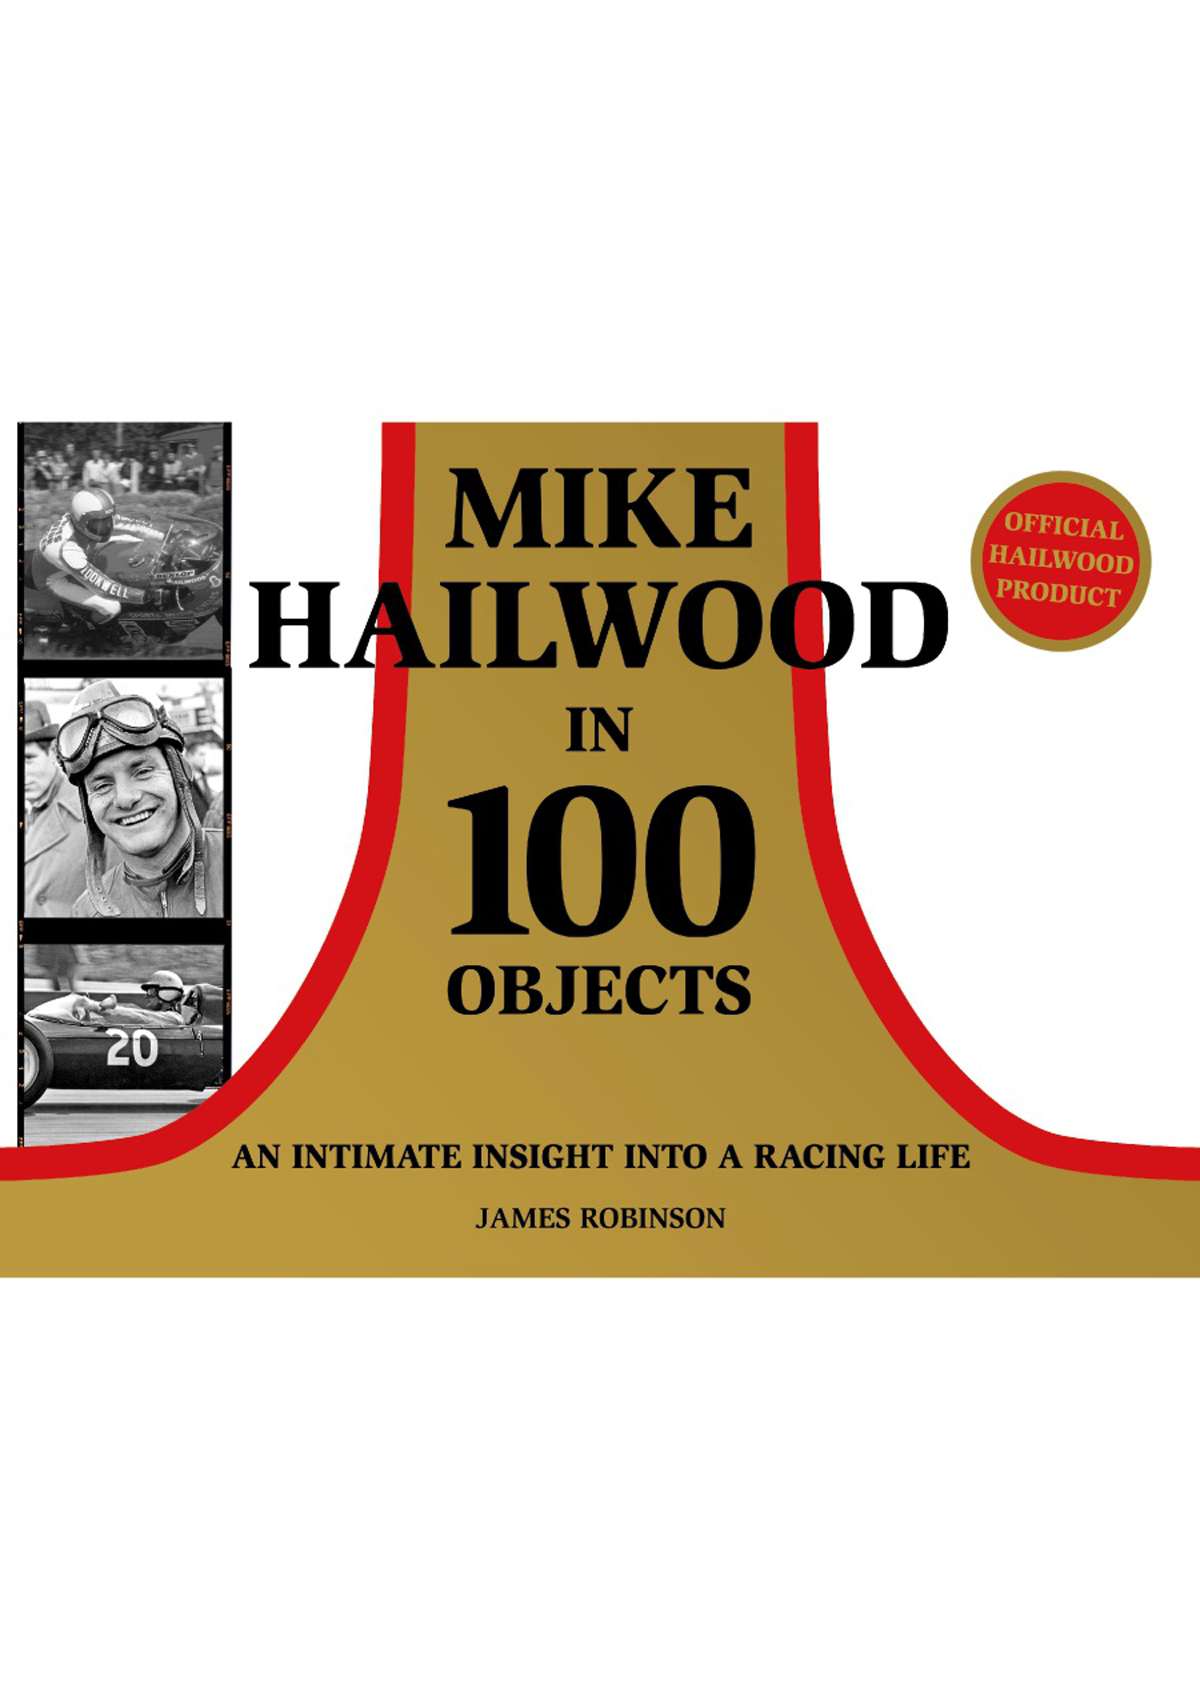 Mike Hailwood in 100 Objects